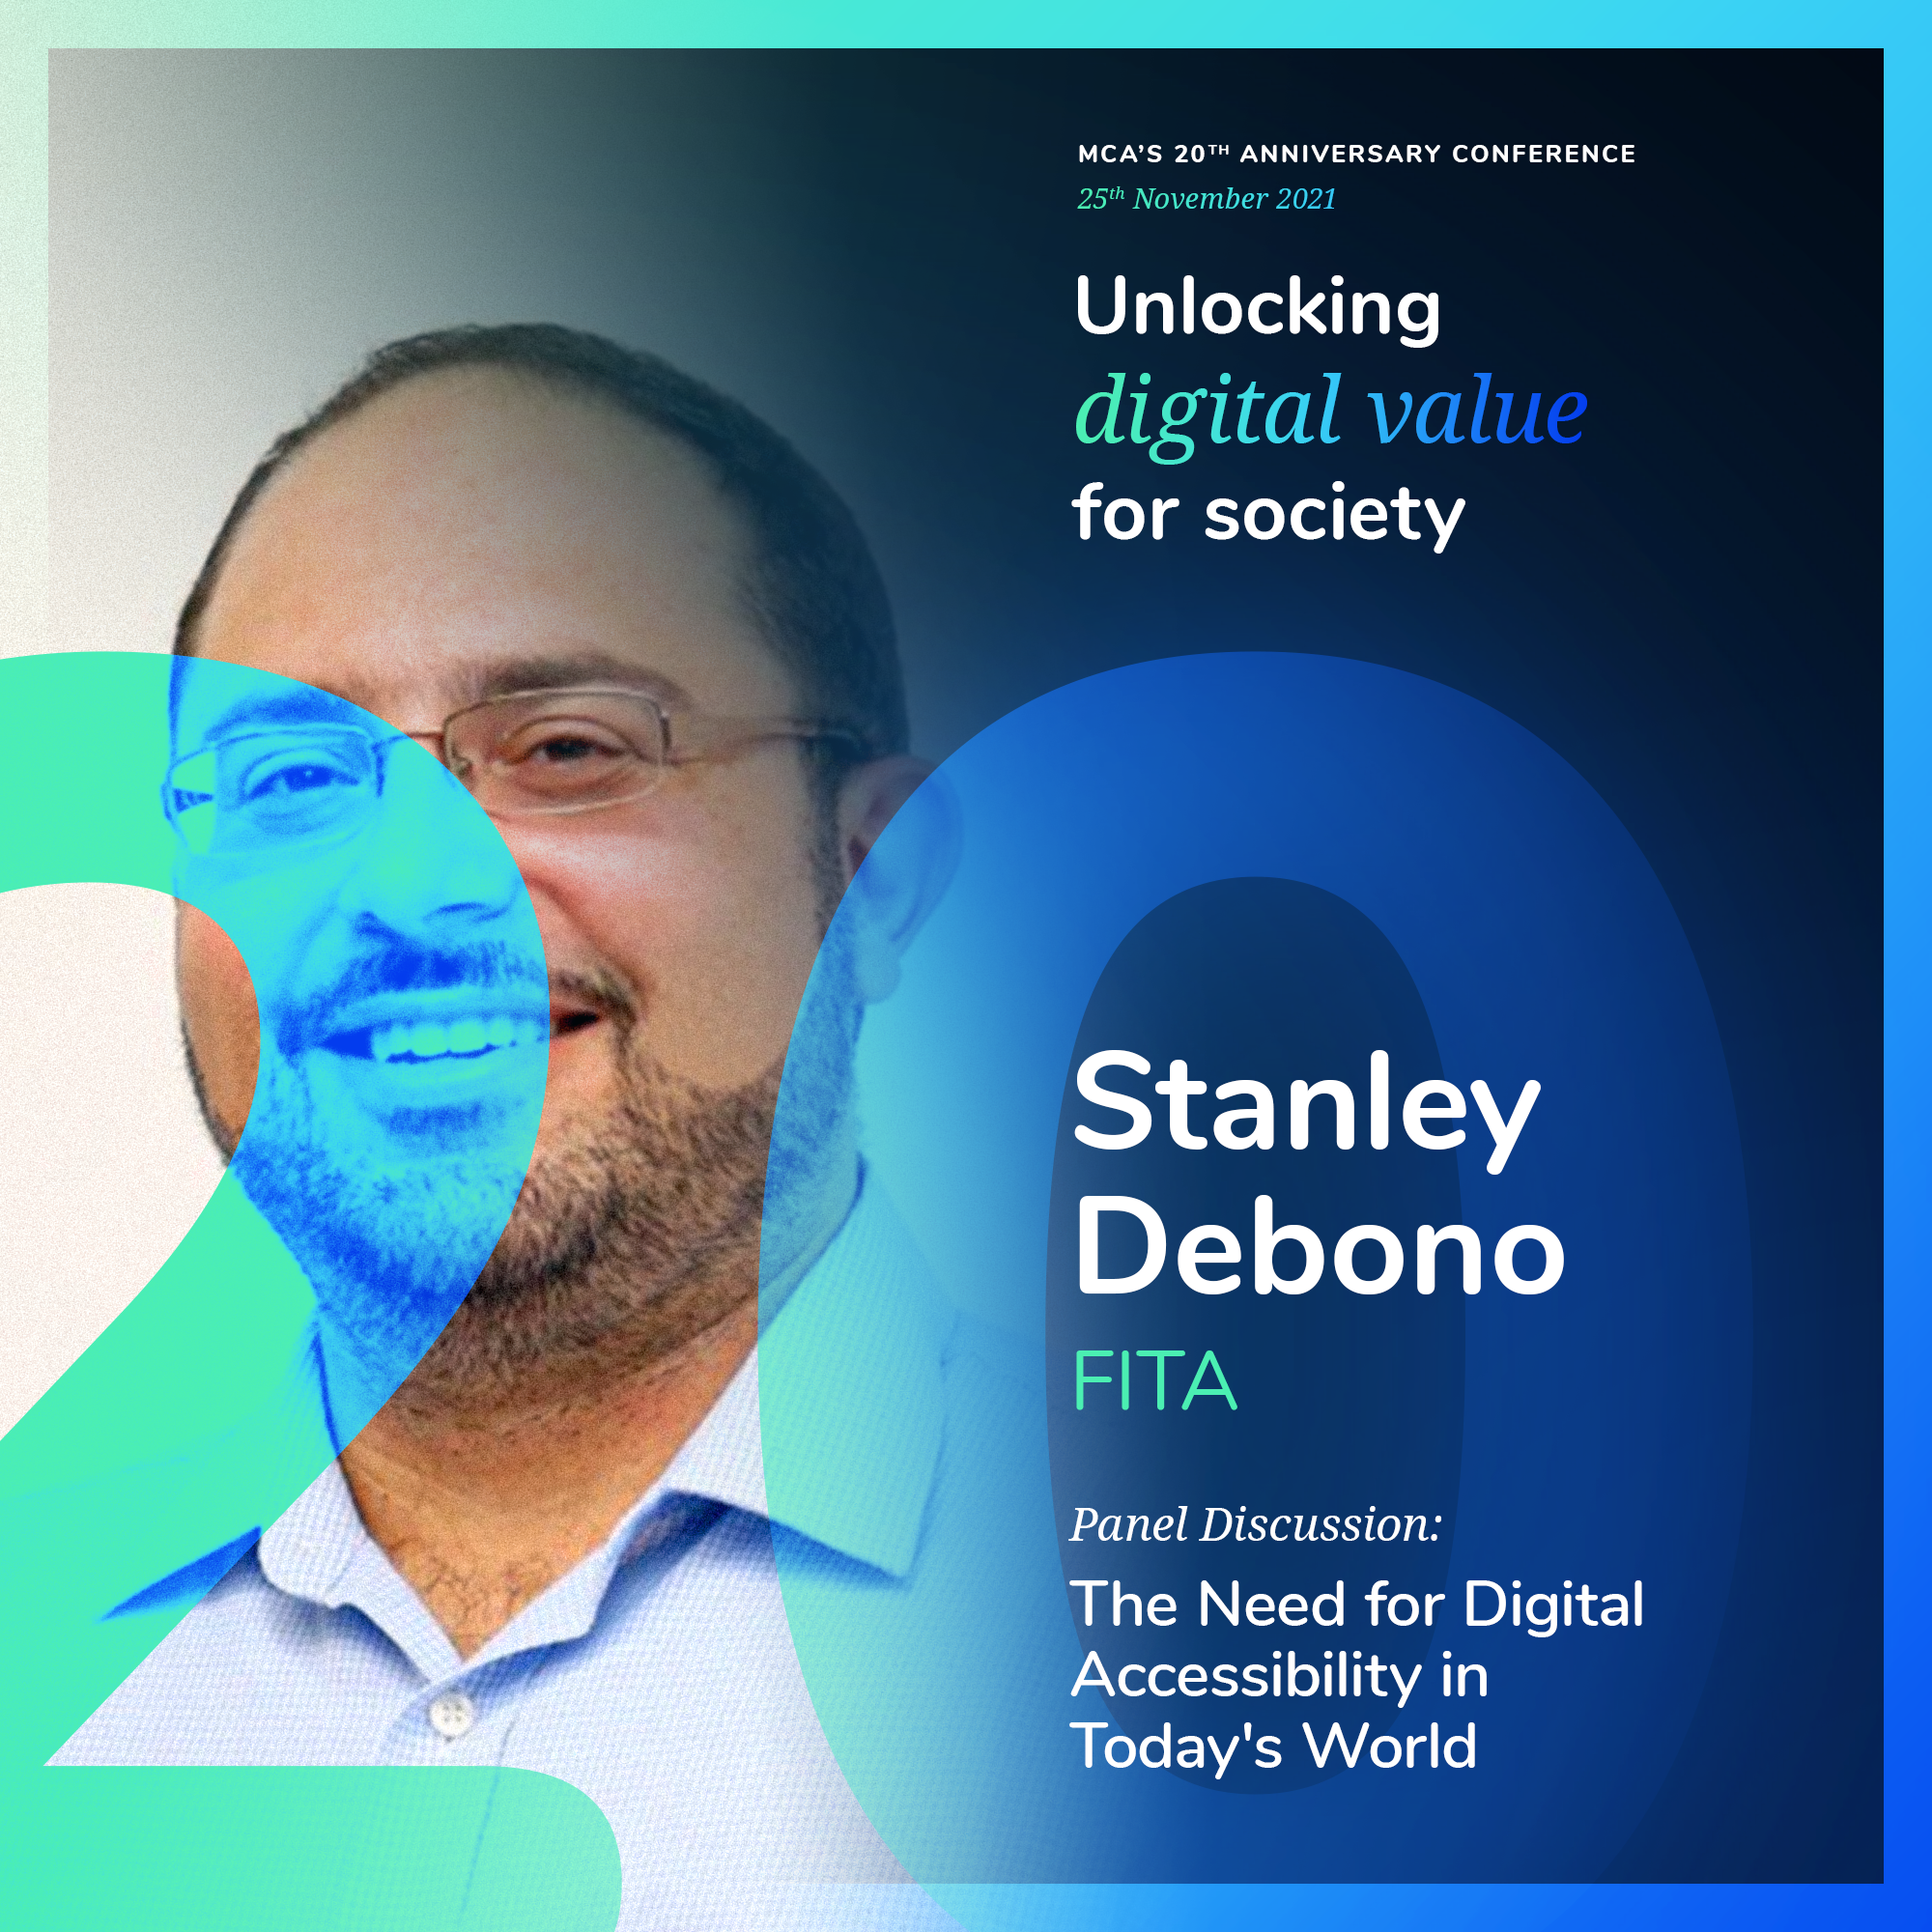 Stanley Debono speaker profile